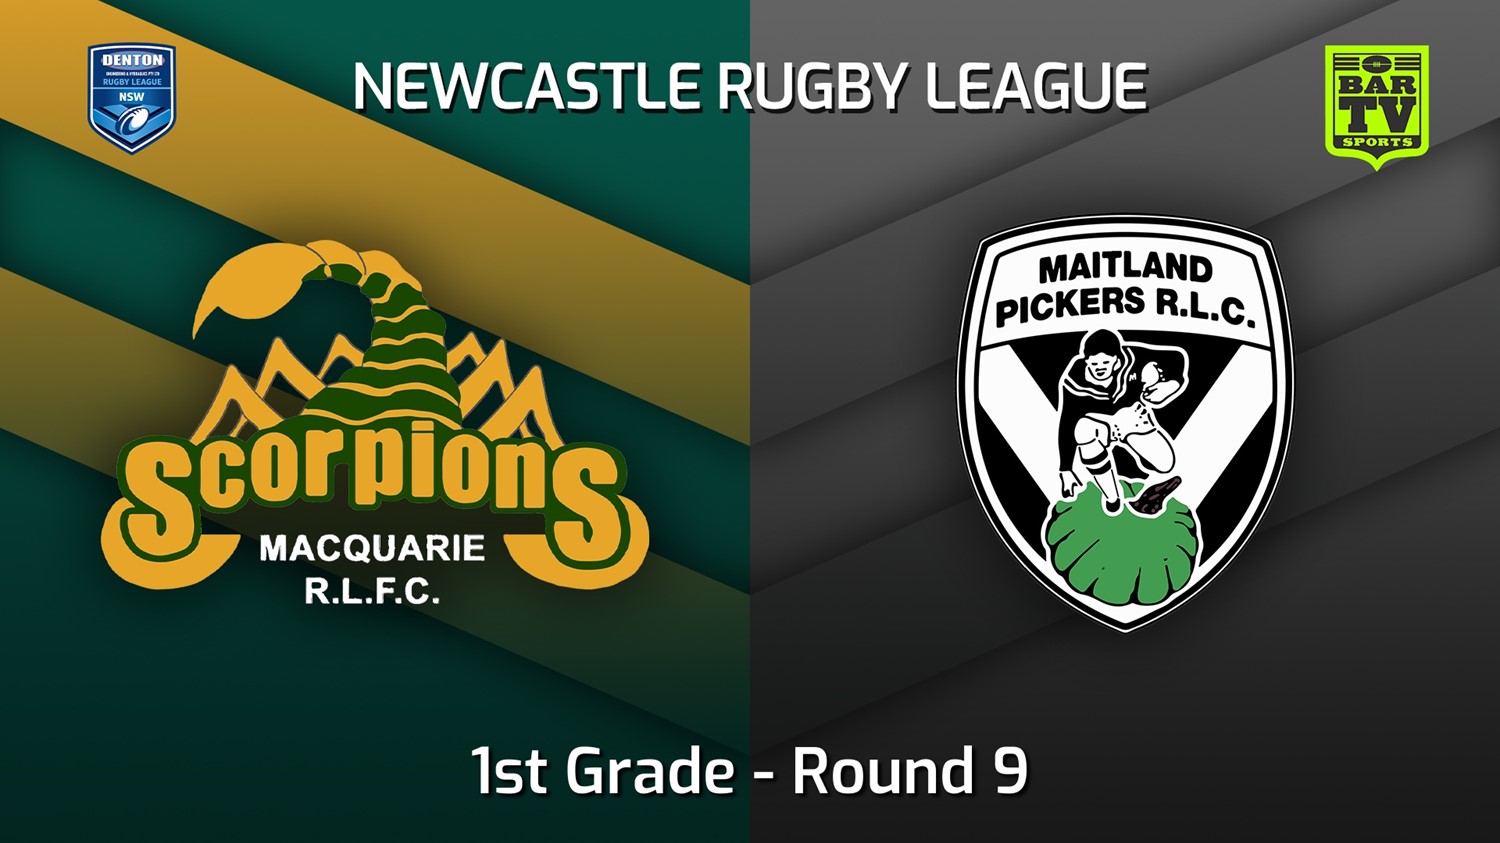 220528-Newcastle Round 9 - 1st Grade - Macquarie Scorpions v Maitland Pickers Slate Image